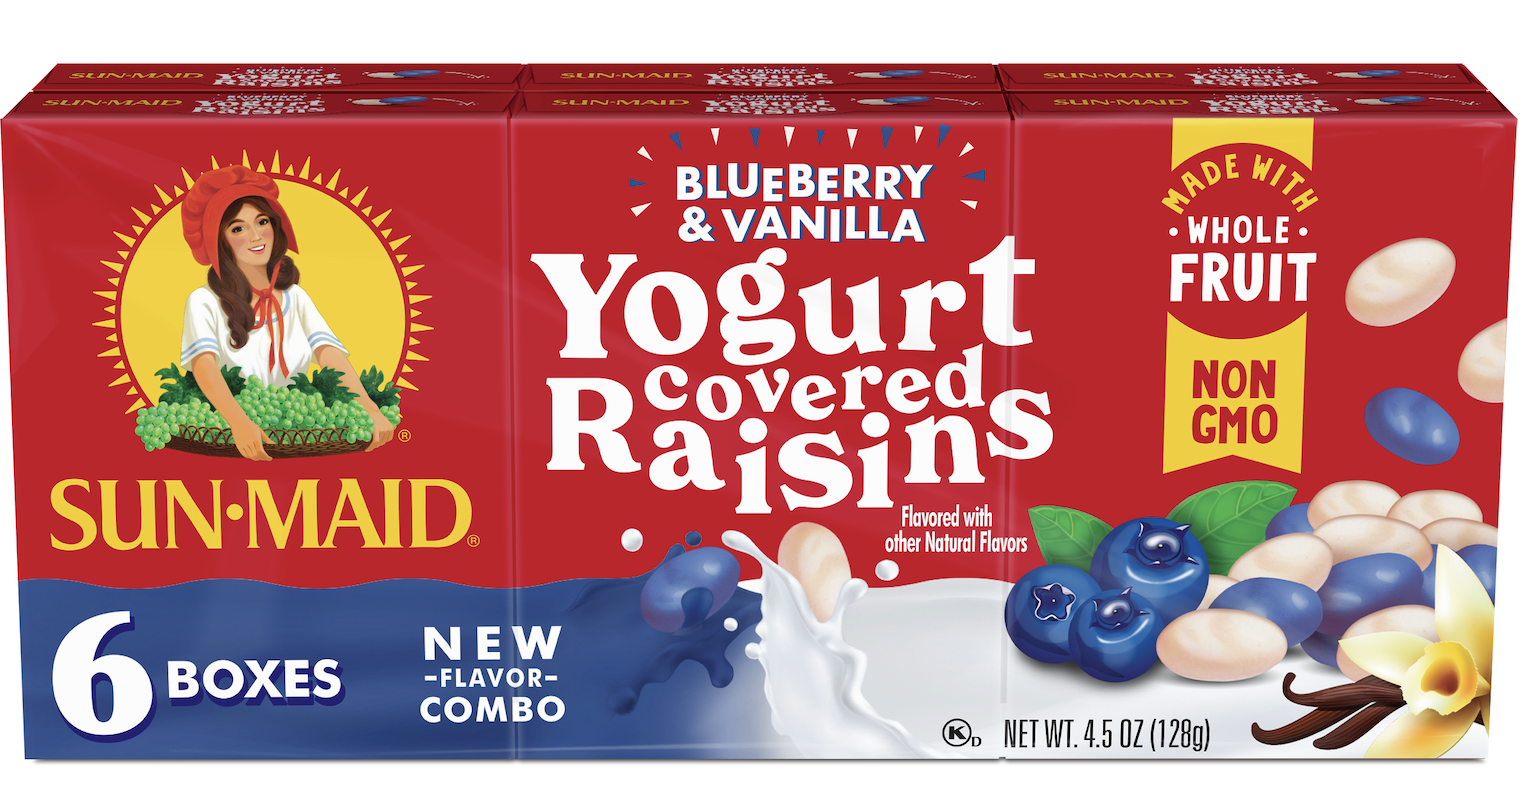 Sun-Maid® Launches All-New Blueberry & Vanilla Yogurt-Covered Raisins